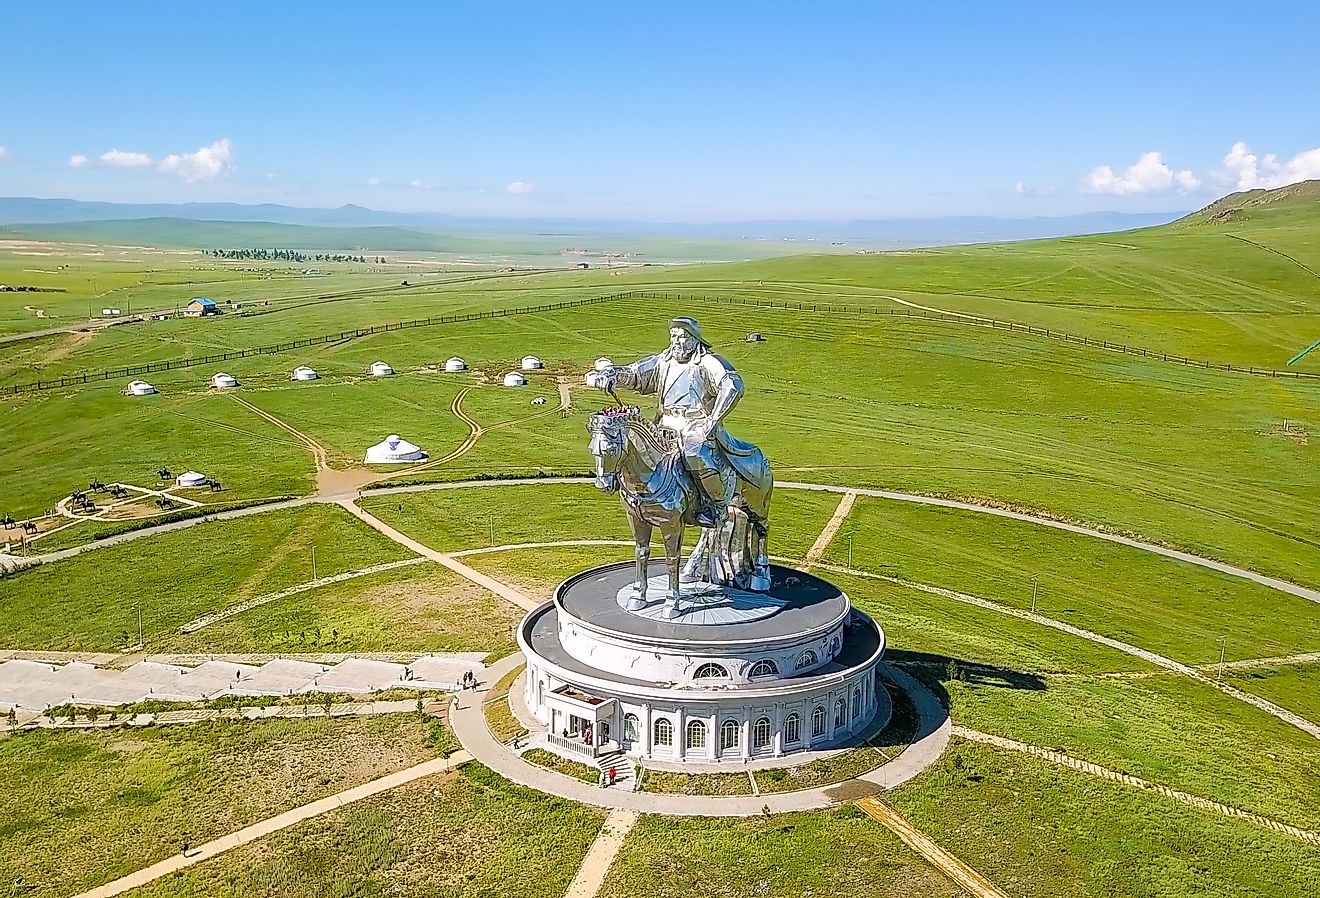 Equestrian statue of Genghis Khan in sunny weather, Mongolia, Ulaanbaatar.